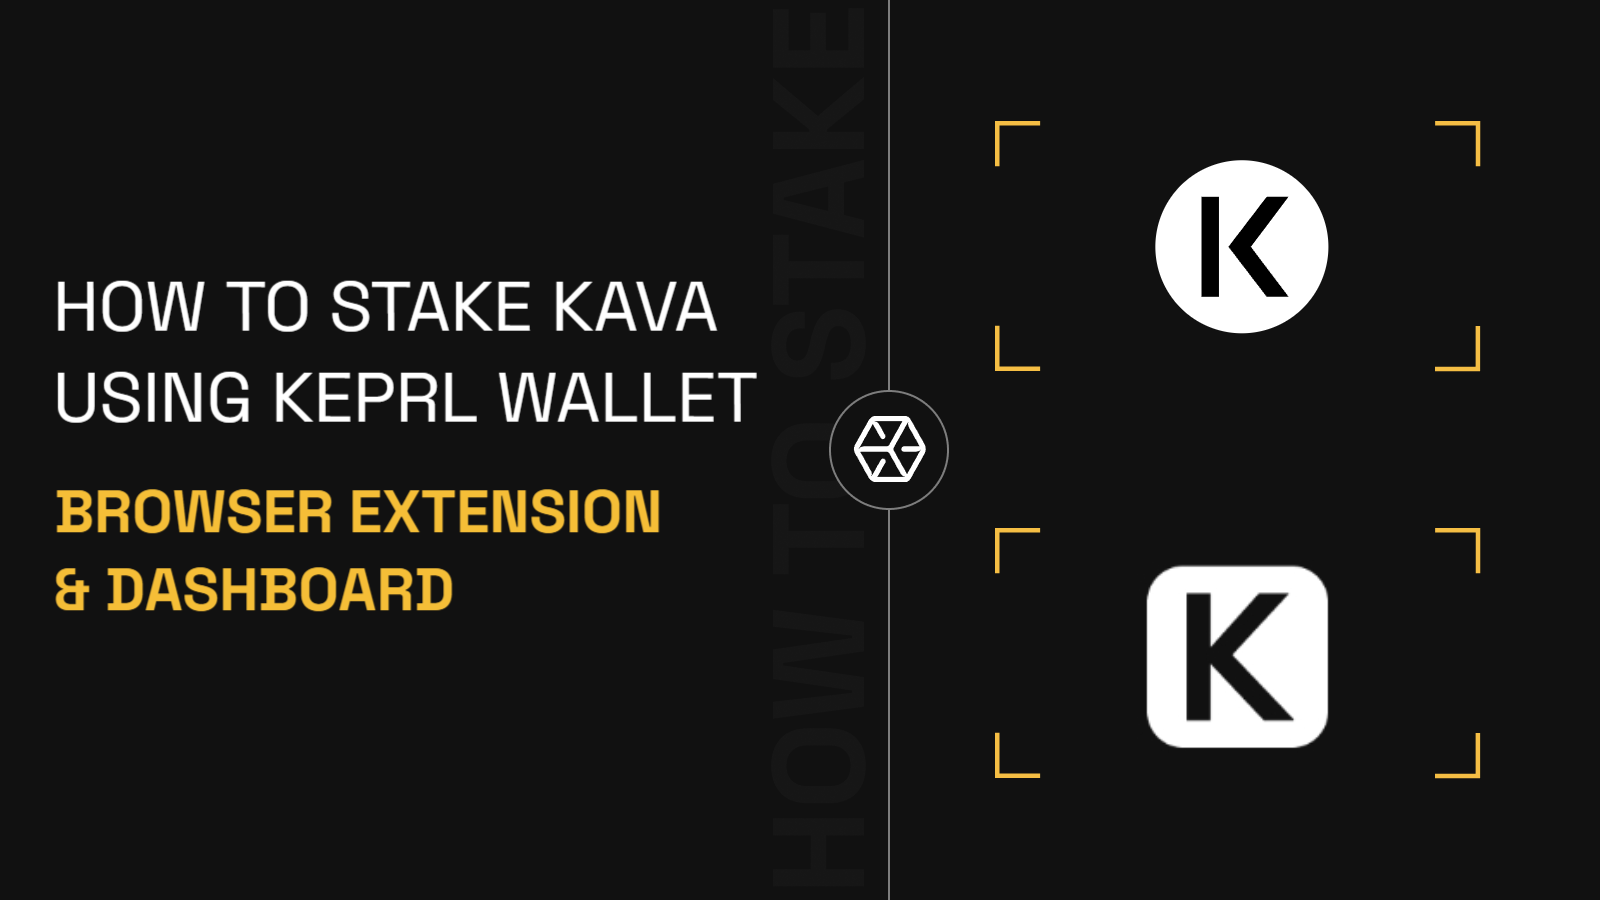 How To Stake KAVA Via Keplr Wallet: A Step-By-Step Guide